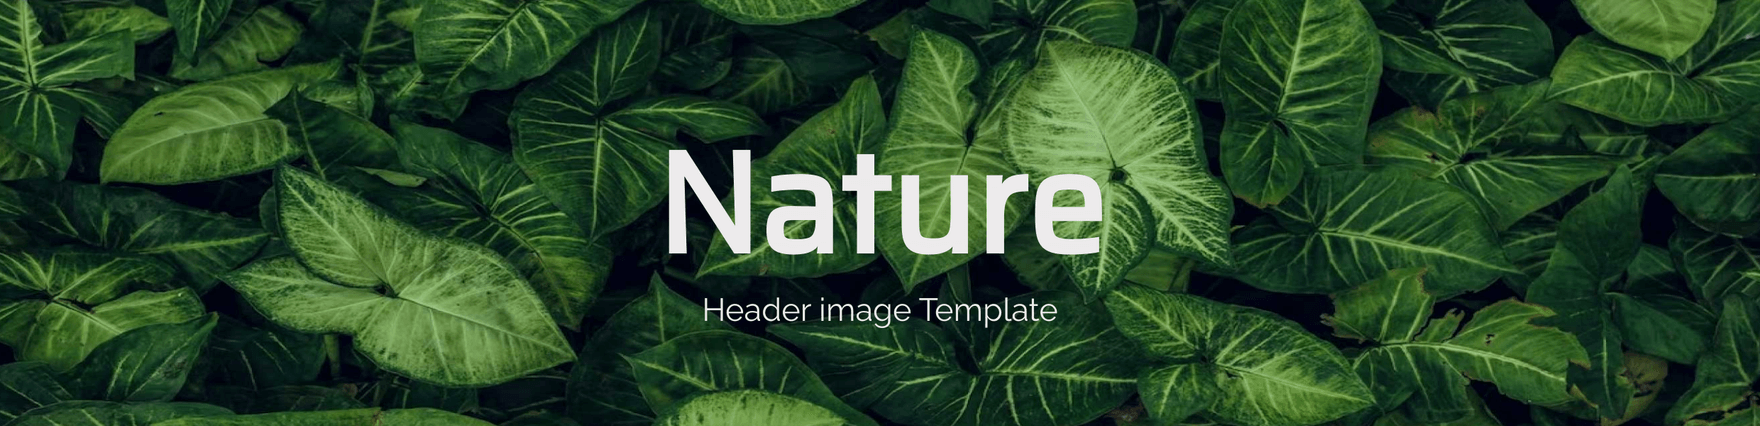 Nature Header Image